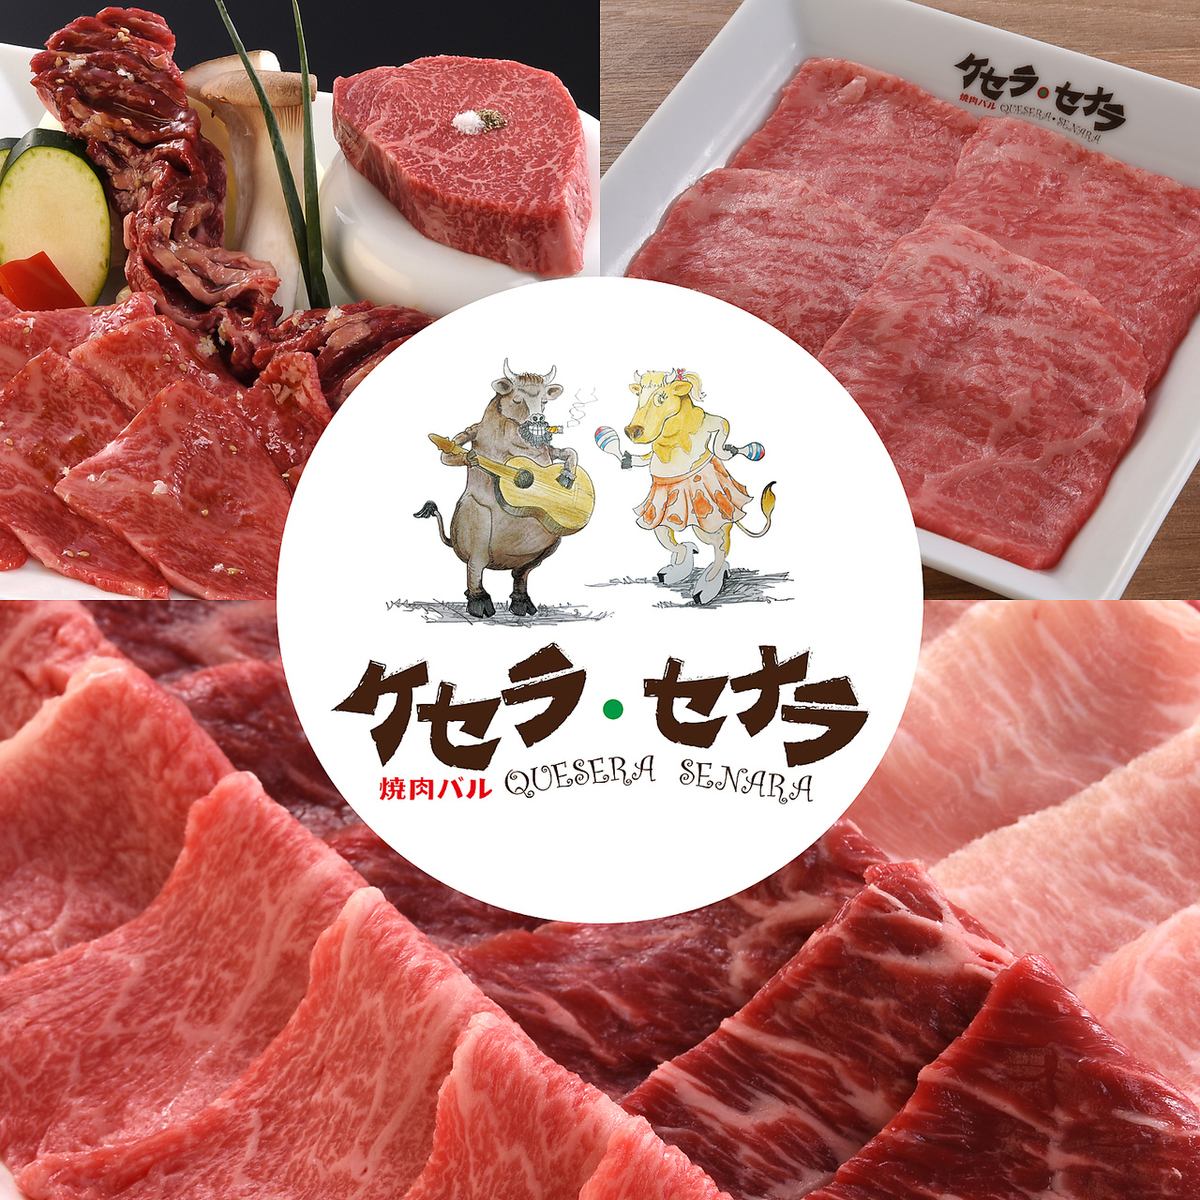 [Yakiniku x Banquet] Reasonably priced A4 Wagyu beef offered at luxury restaurants♪♪